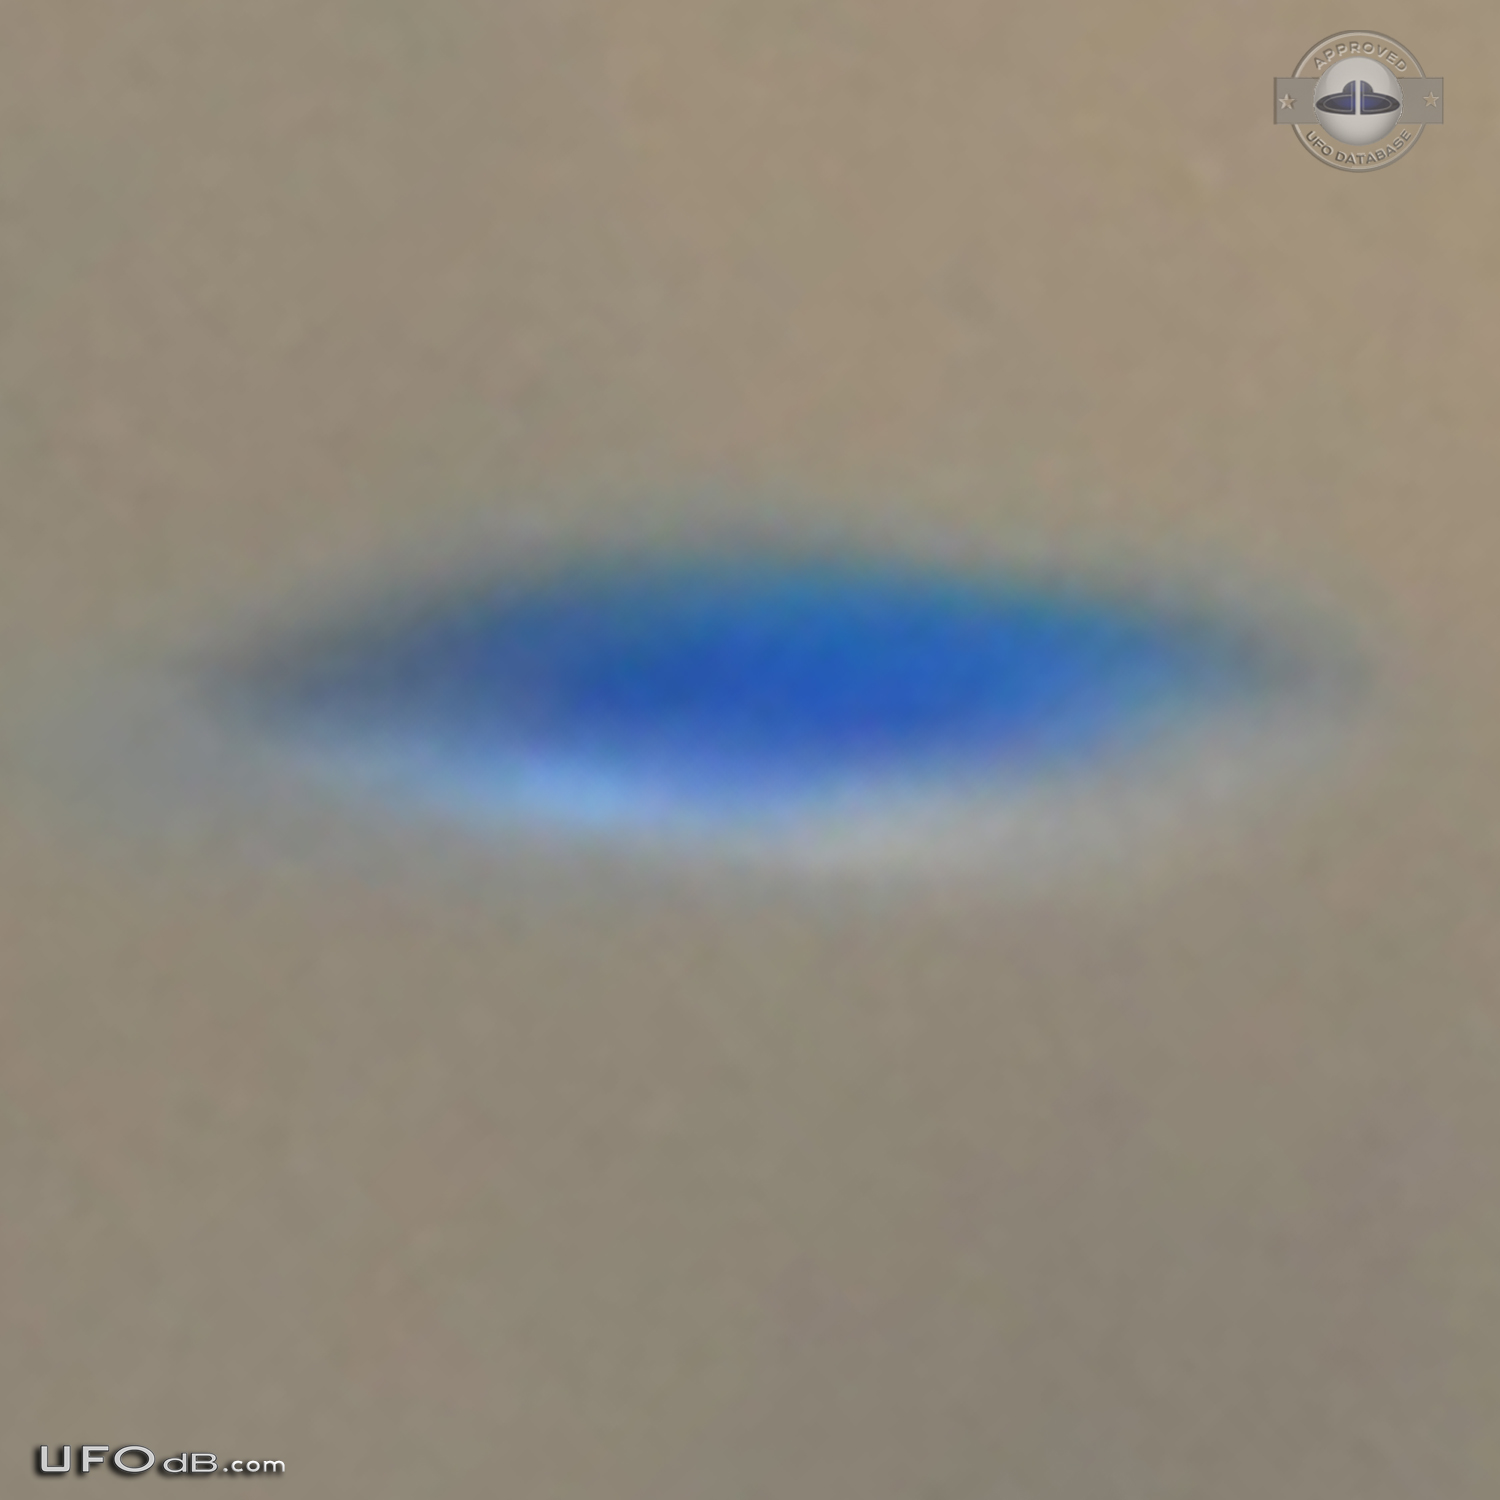 Orange Saucer UFO caught on picture over Chatsworth, California 2012 UFO Picture #507-6